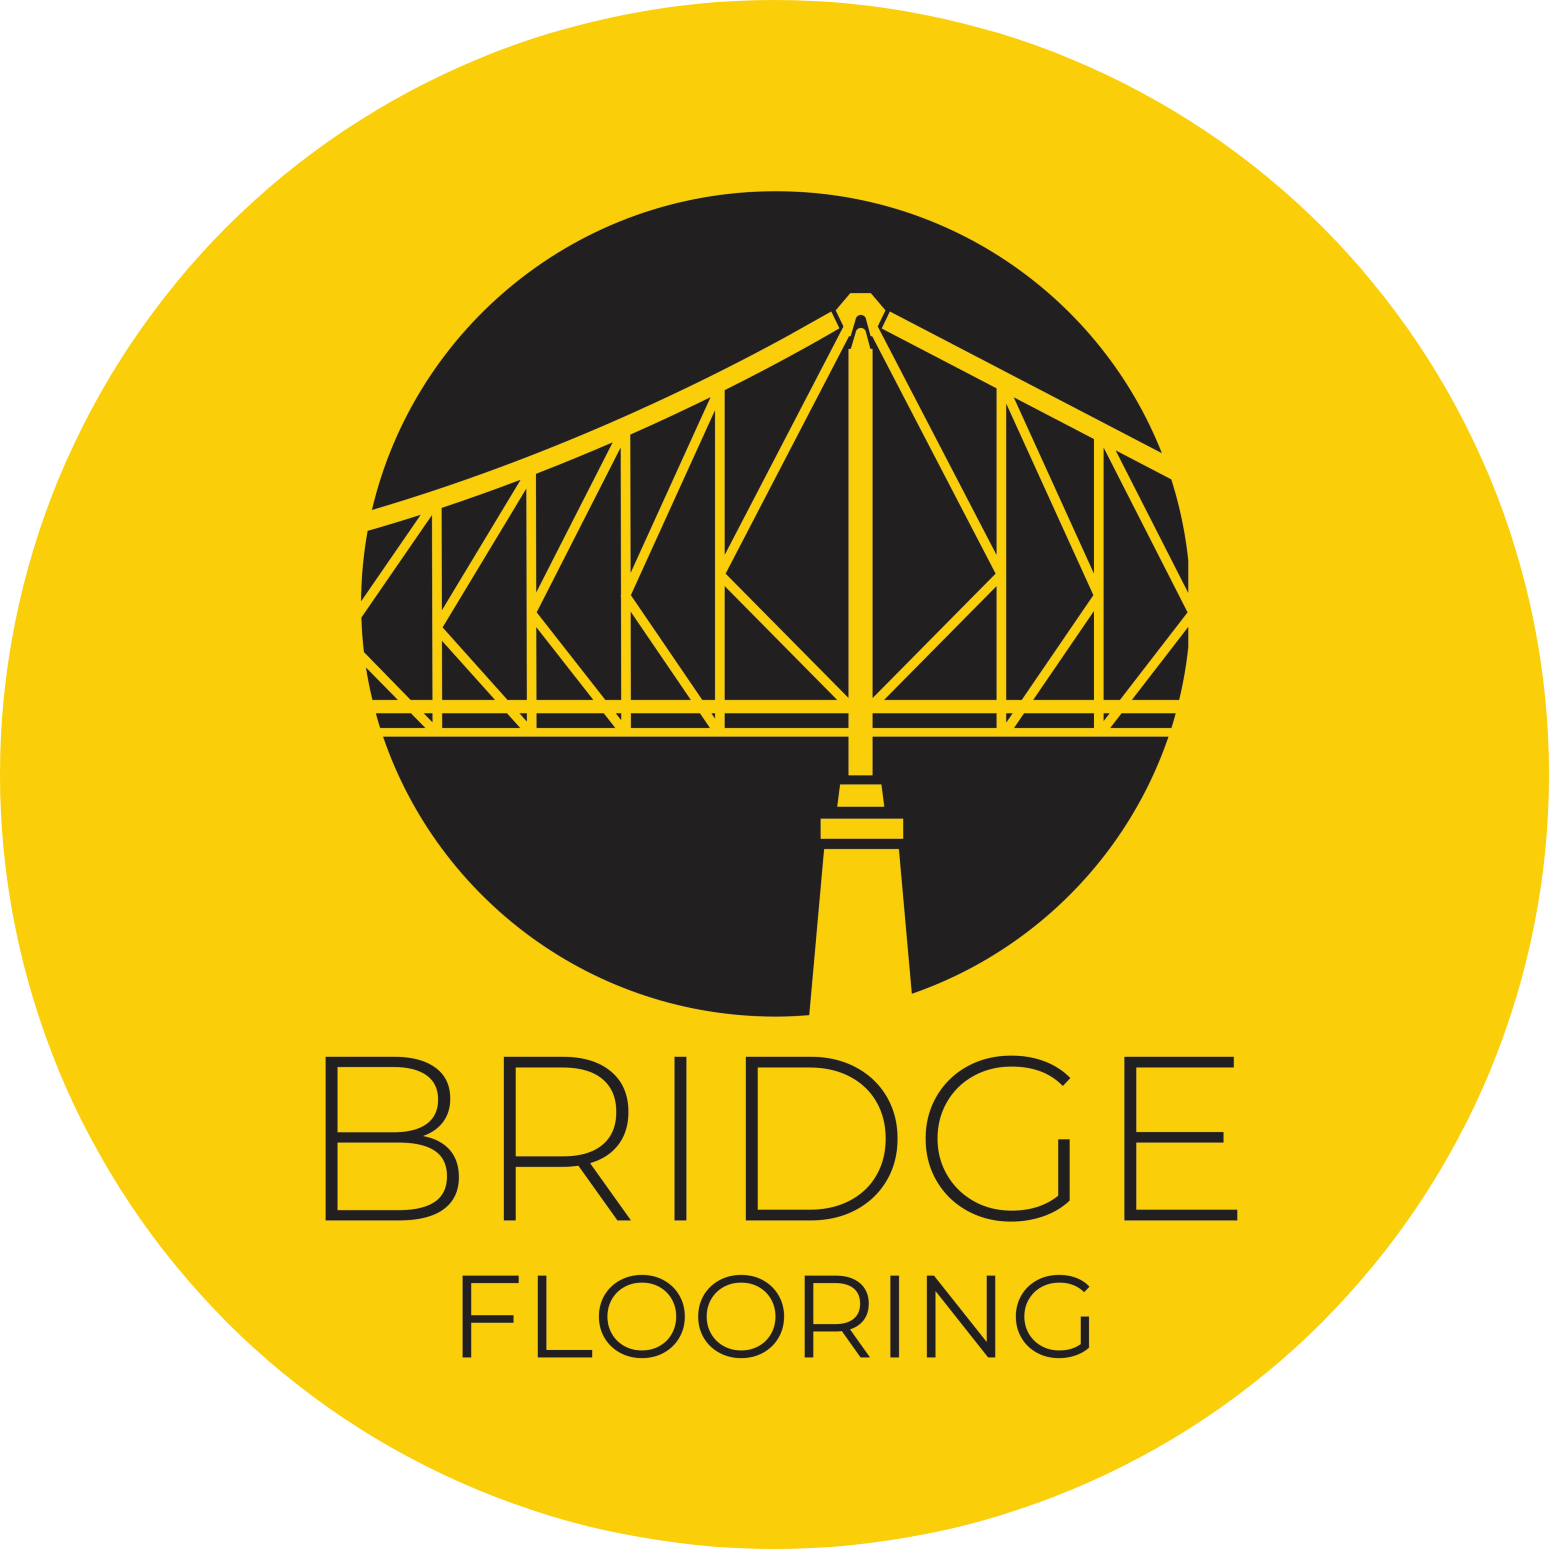 www.bridgeflooringleyland.online   Bridge Flooring of Leyland 01772 437800 - We cover Lancashire for all your Flooring needs with in-house fitting team.  #Herringboneflooring; #Italiancarpetcollection; #FREEQUOTESFLOORING; www.bridgeflooringleyland.online: #Bridgeflooring